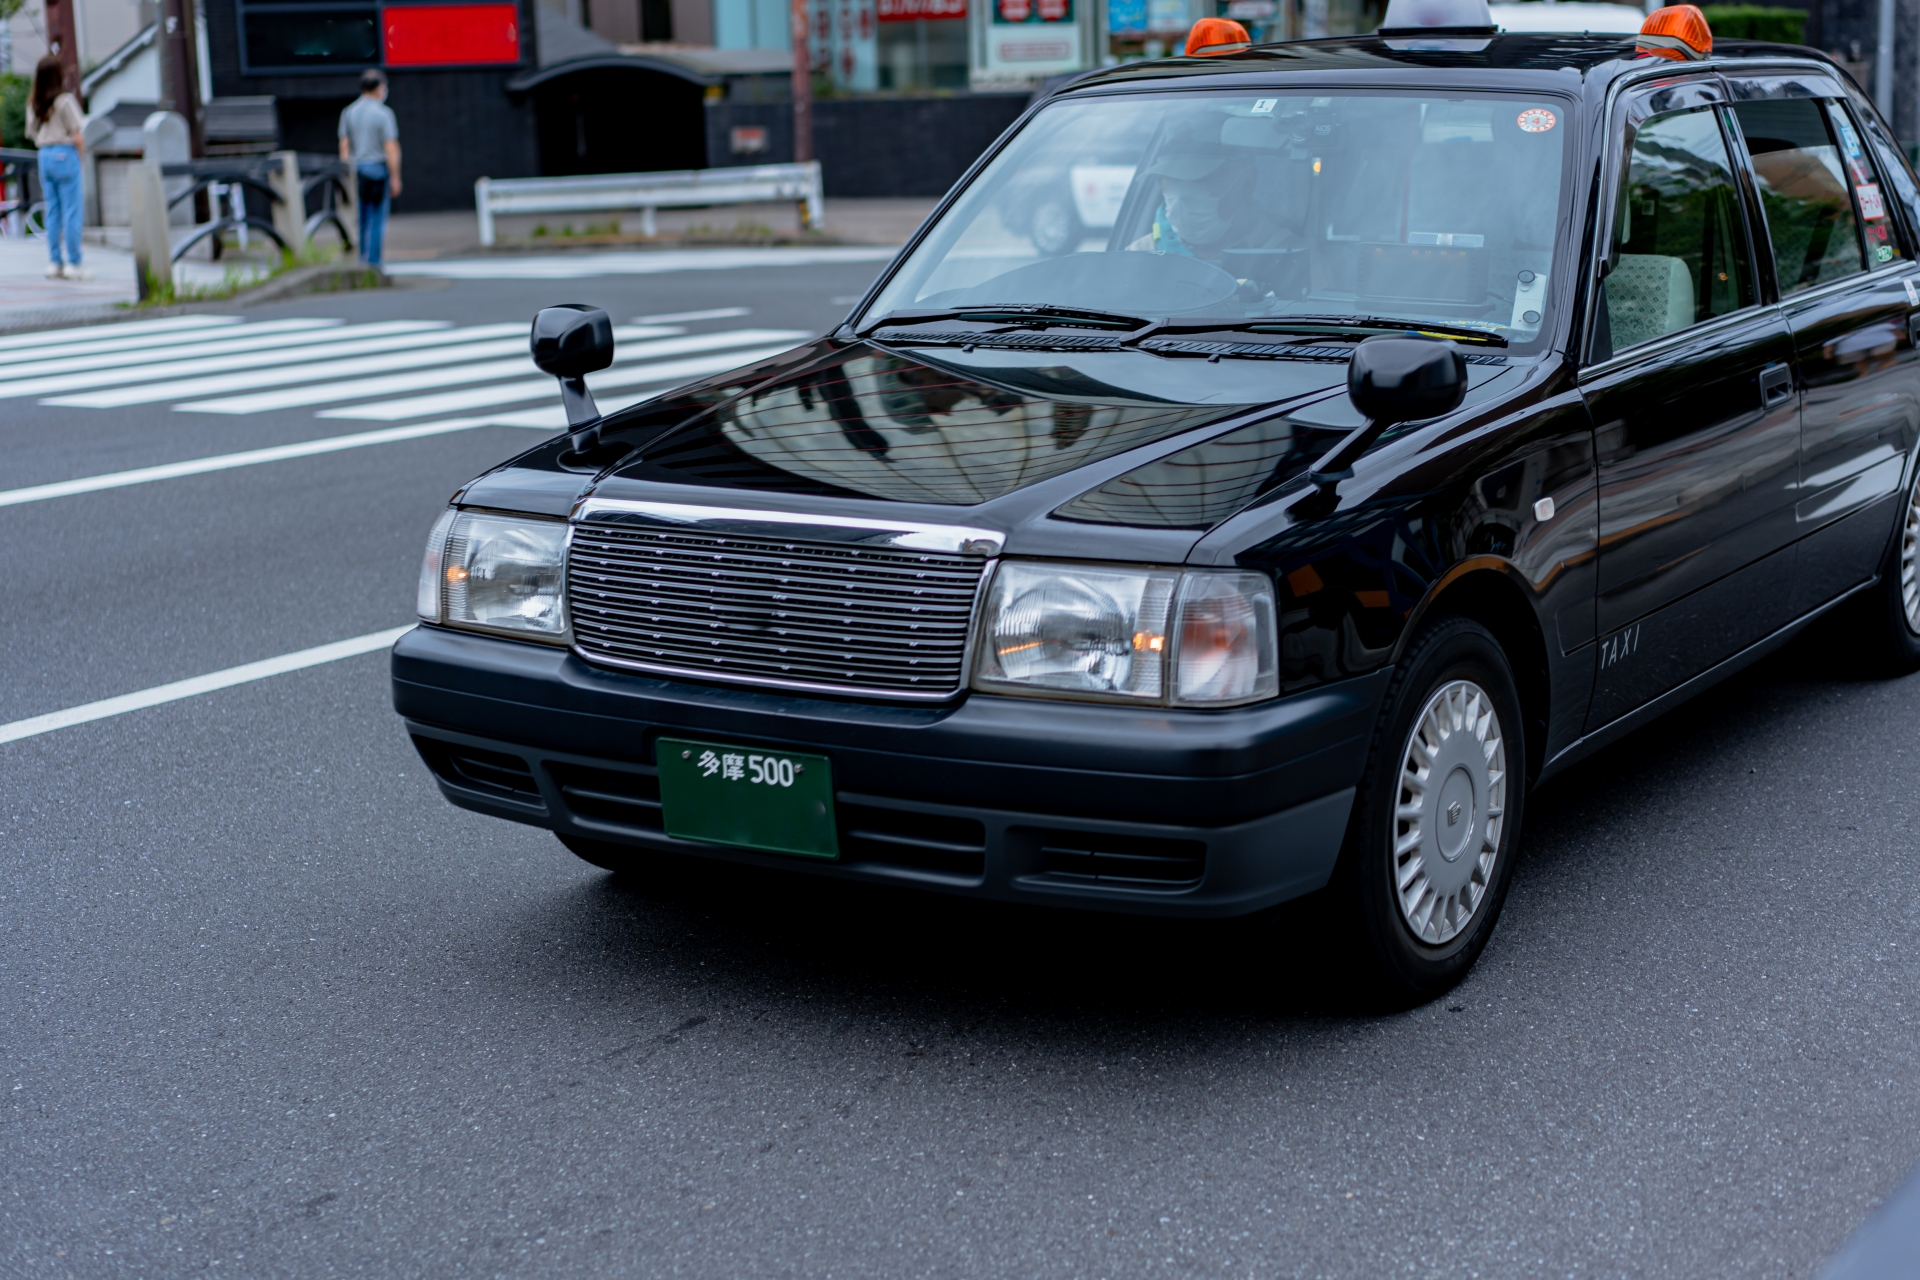 JR立川駅から「ソラノホテル」へは、便利で楽々♬往復タクシーで